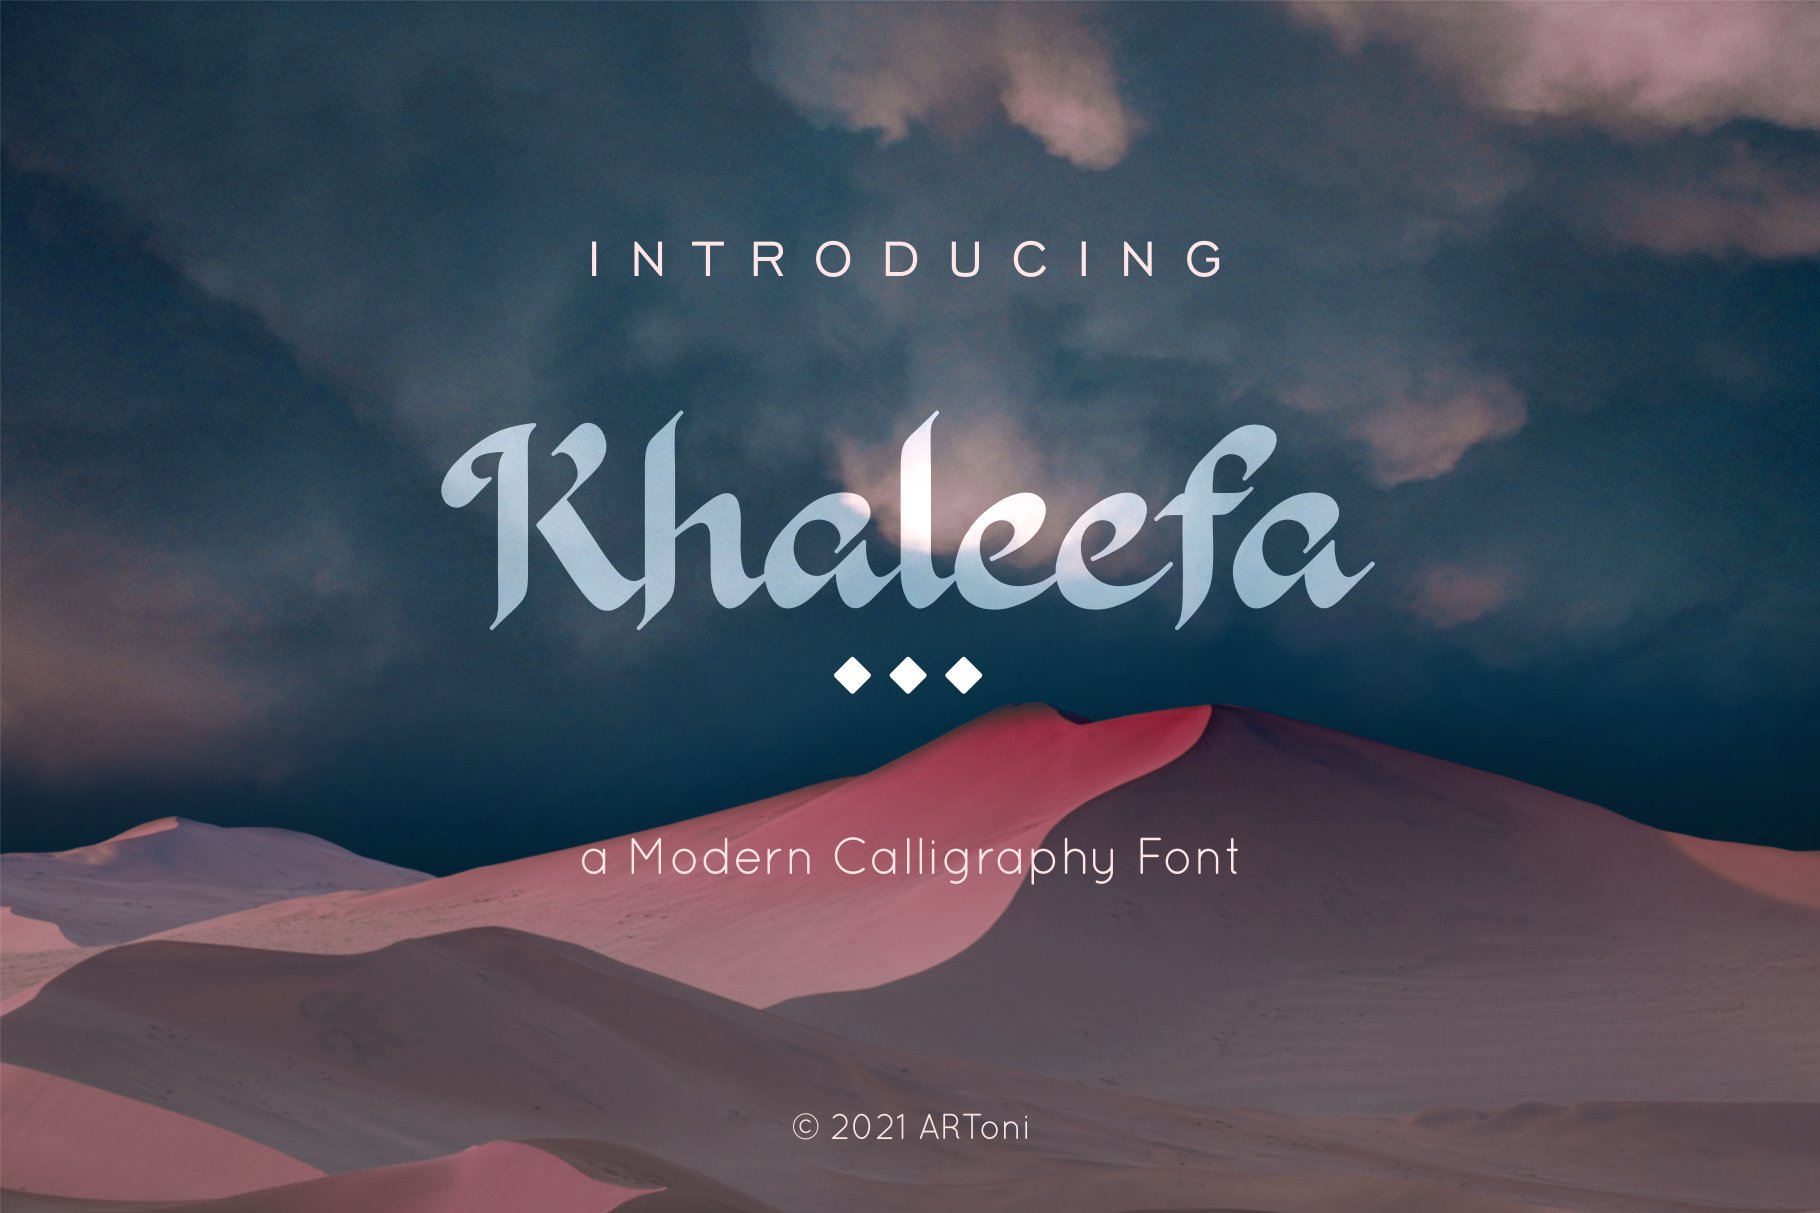 Khaleefa cover image.